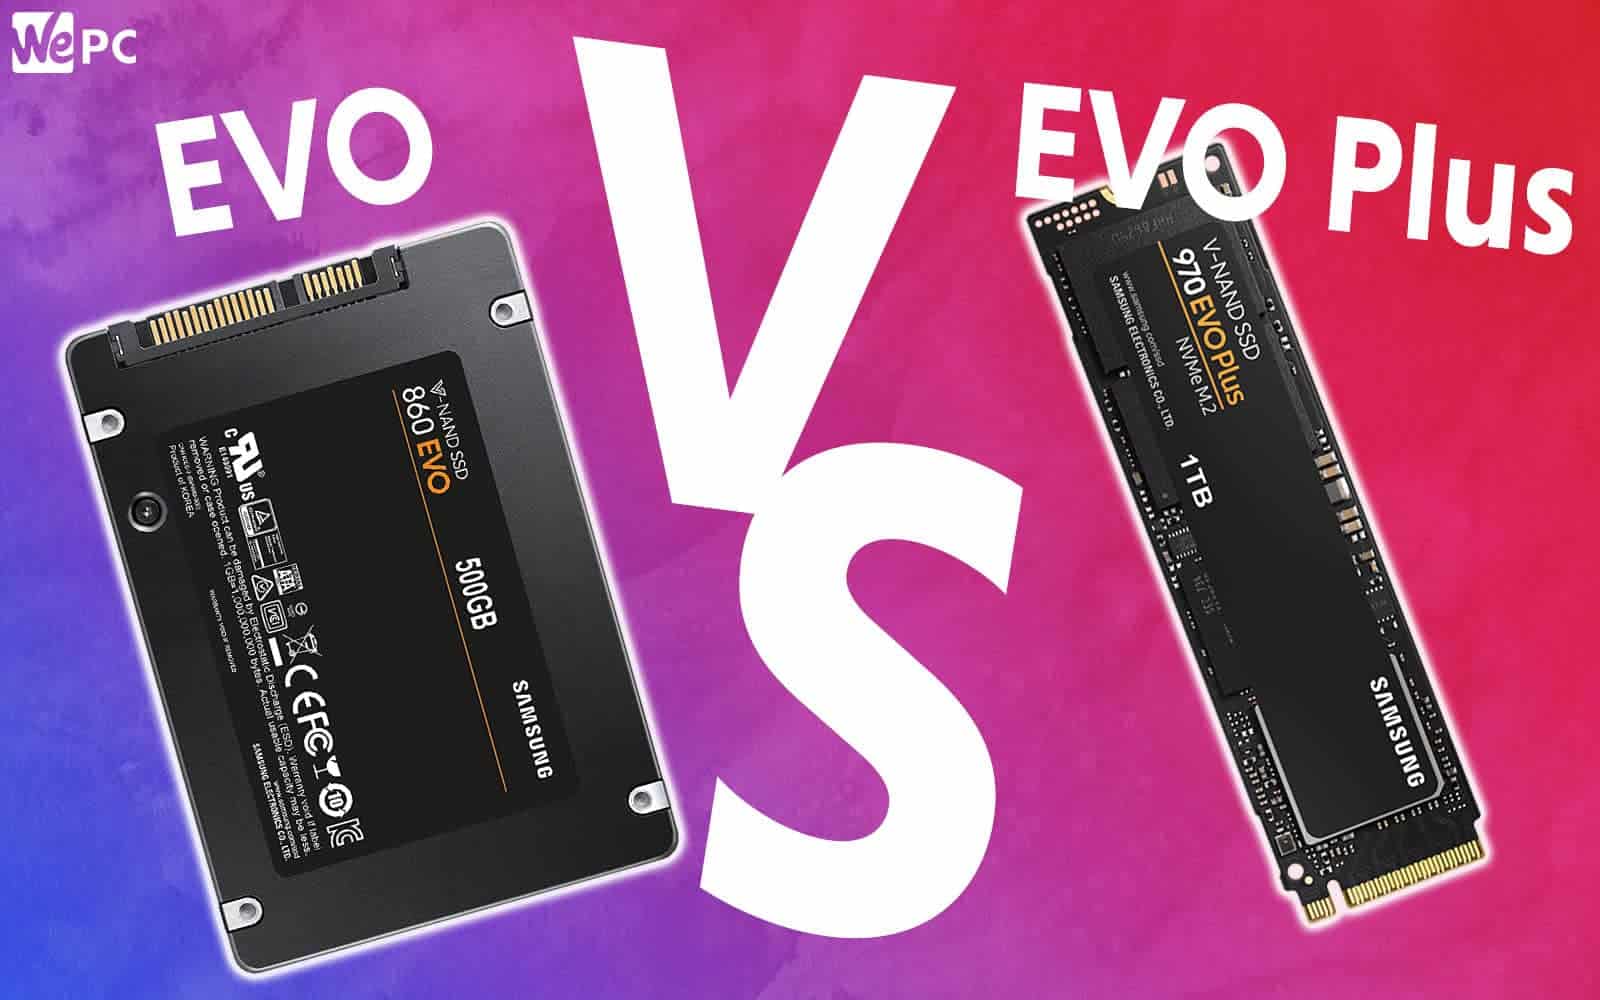 Samsung 970 EVO vs EVO Plus vs Pro: Detailed Comparison